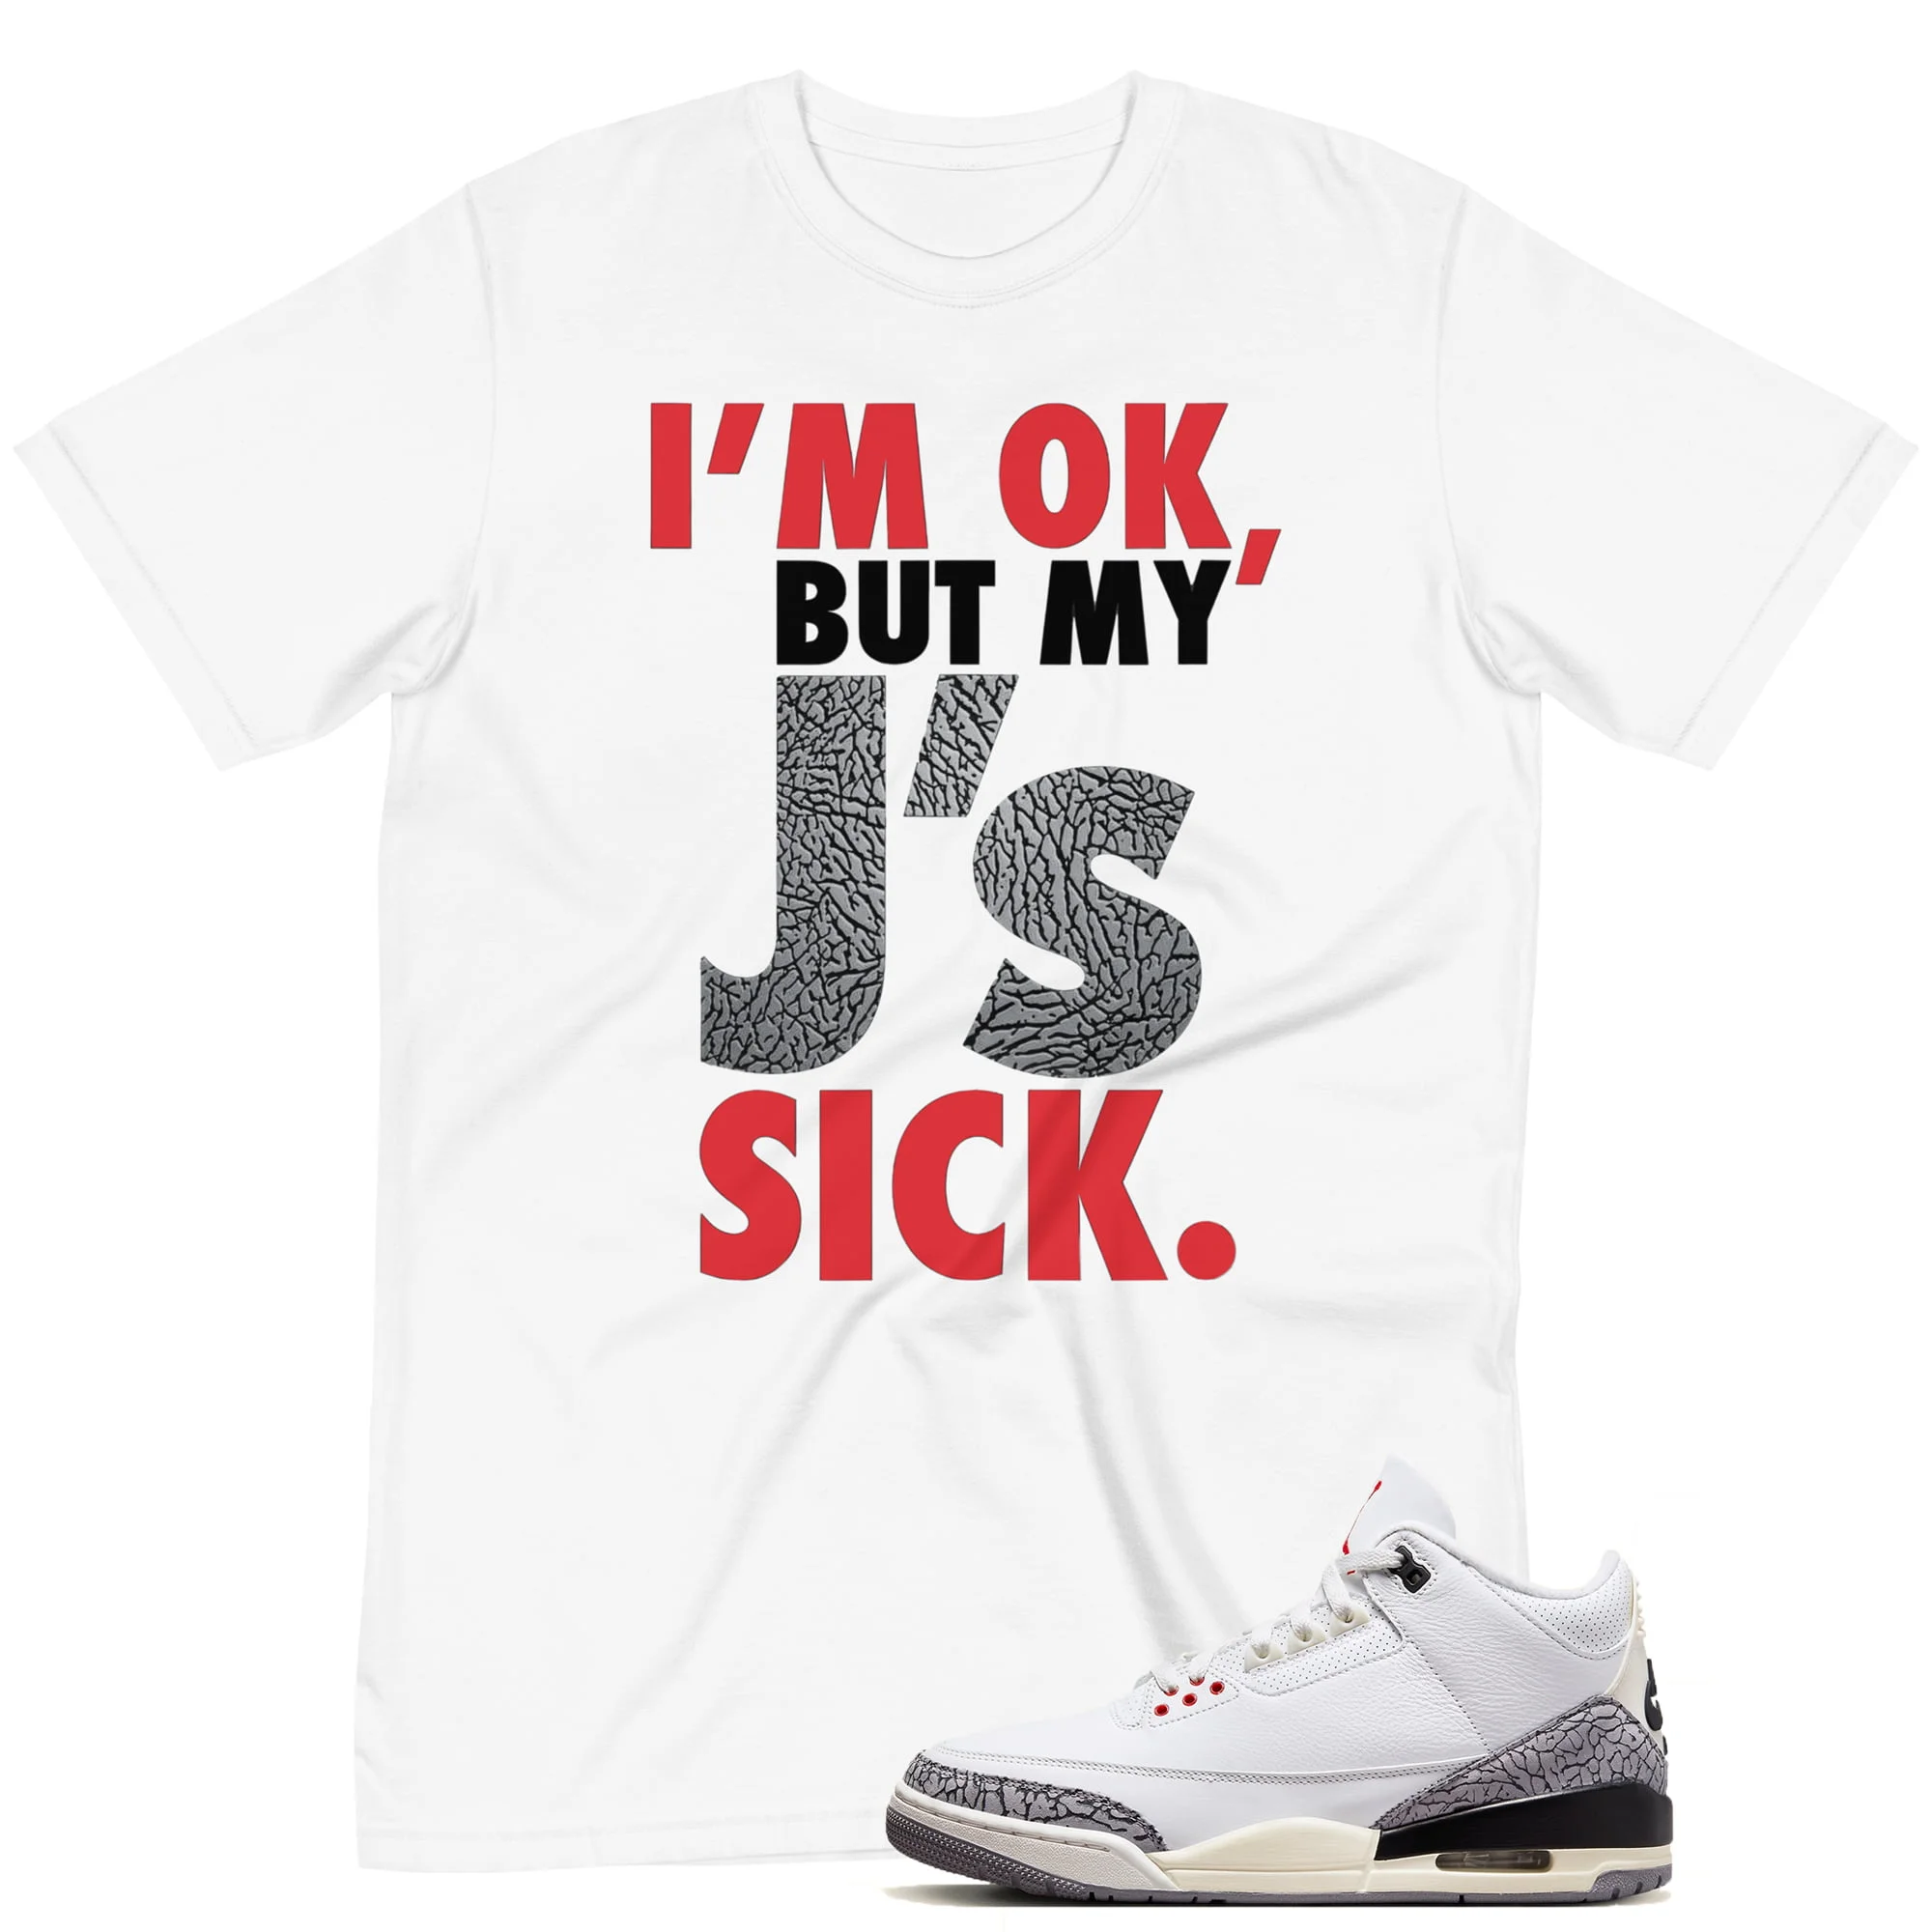 Jordan 3 White Cement Reimagined Shirt Sick Kicks